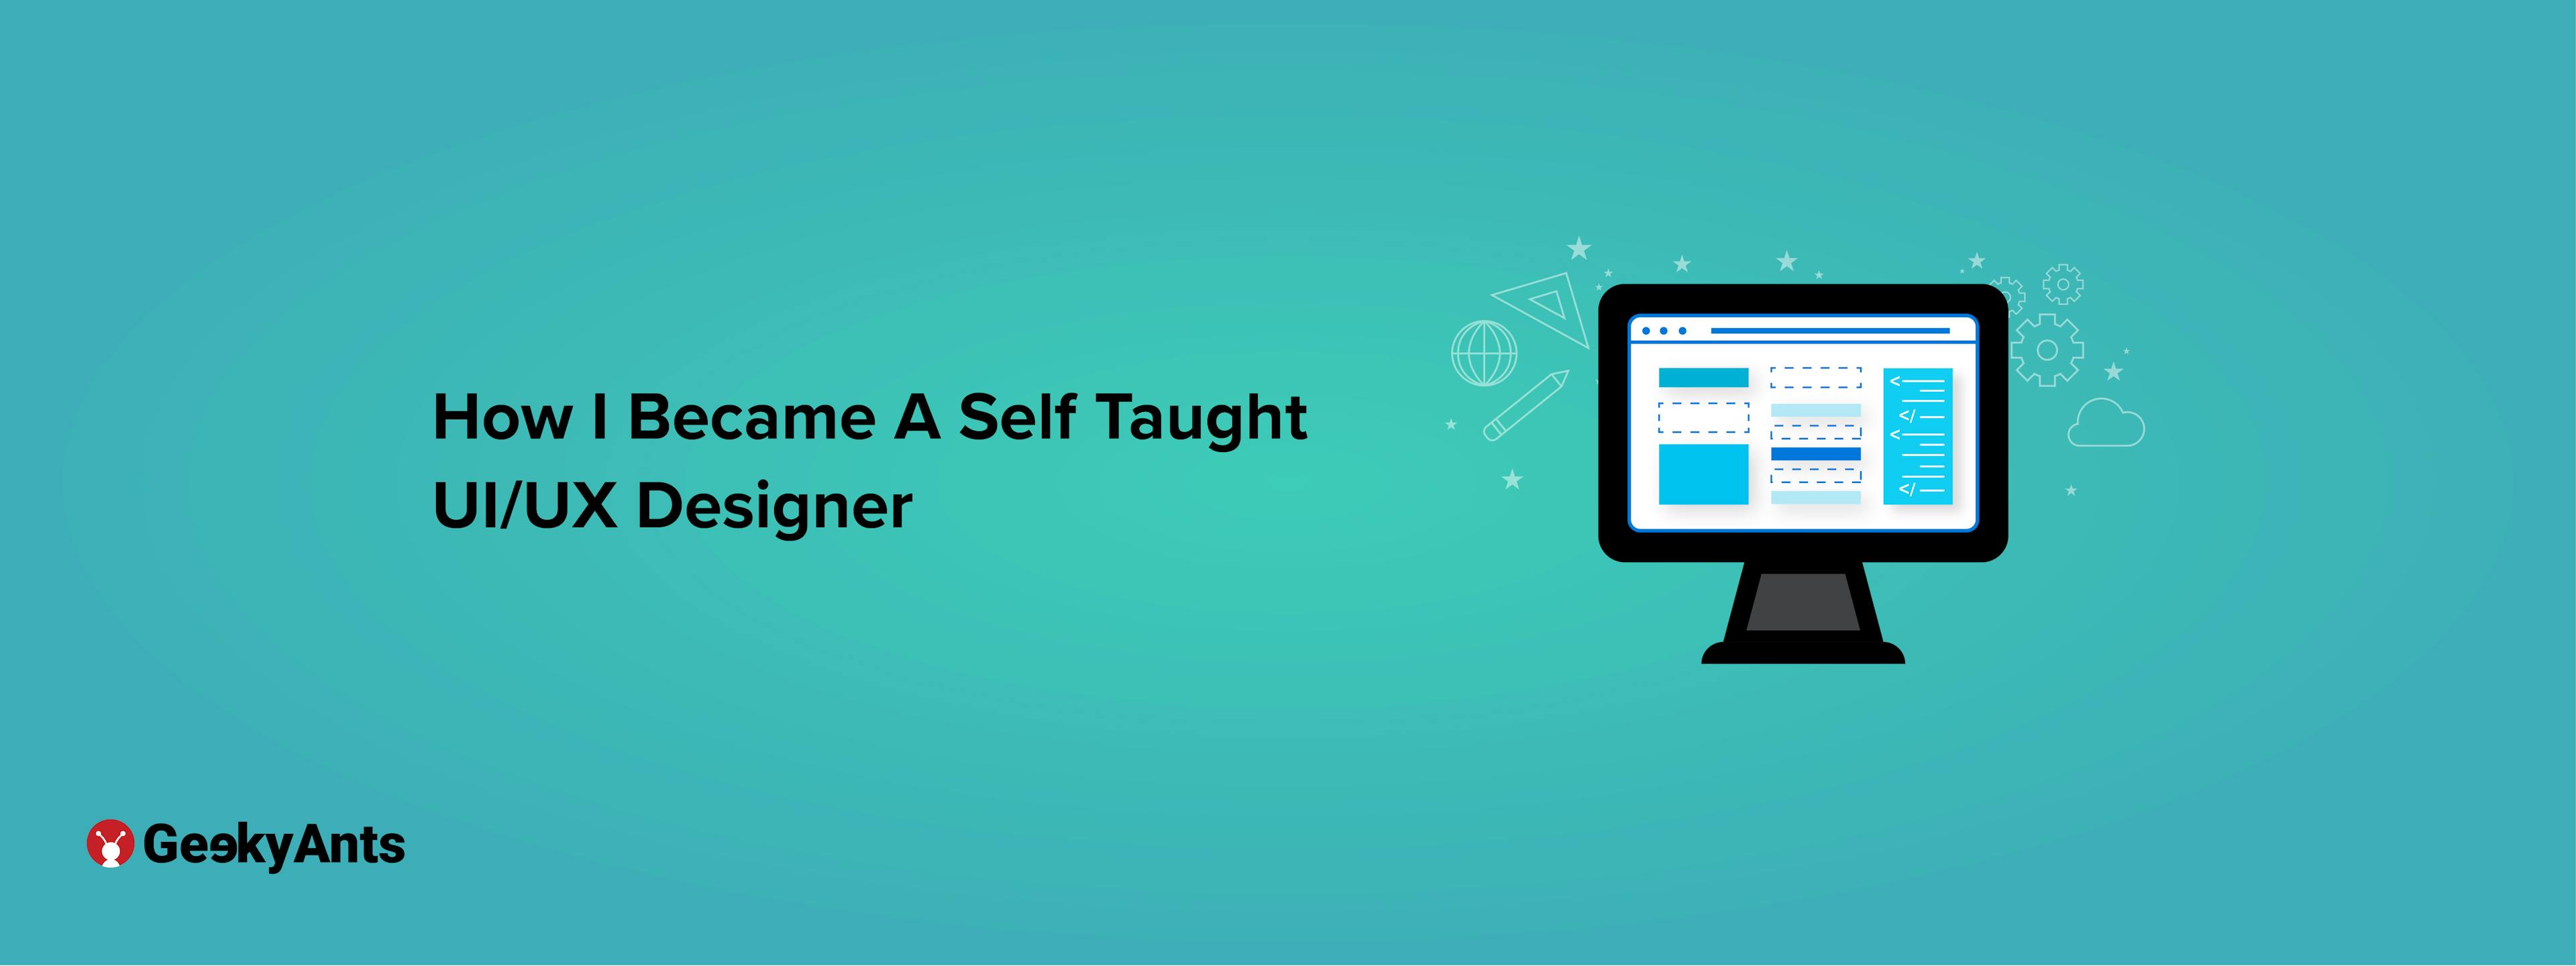 How I Became A Self Taught UI/UX Designer